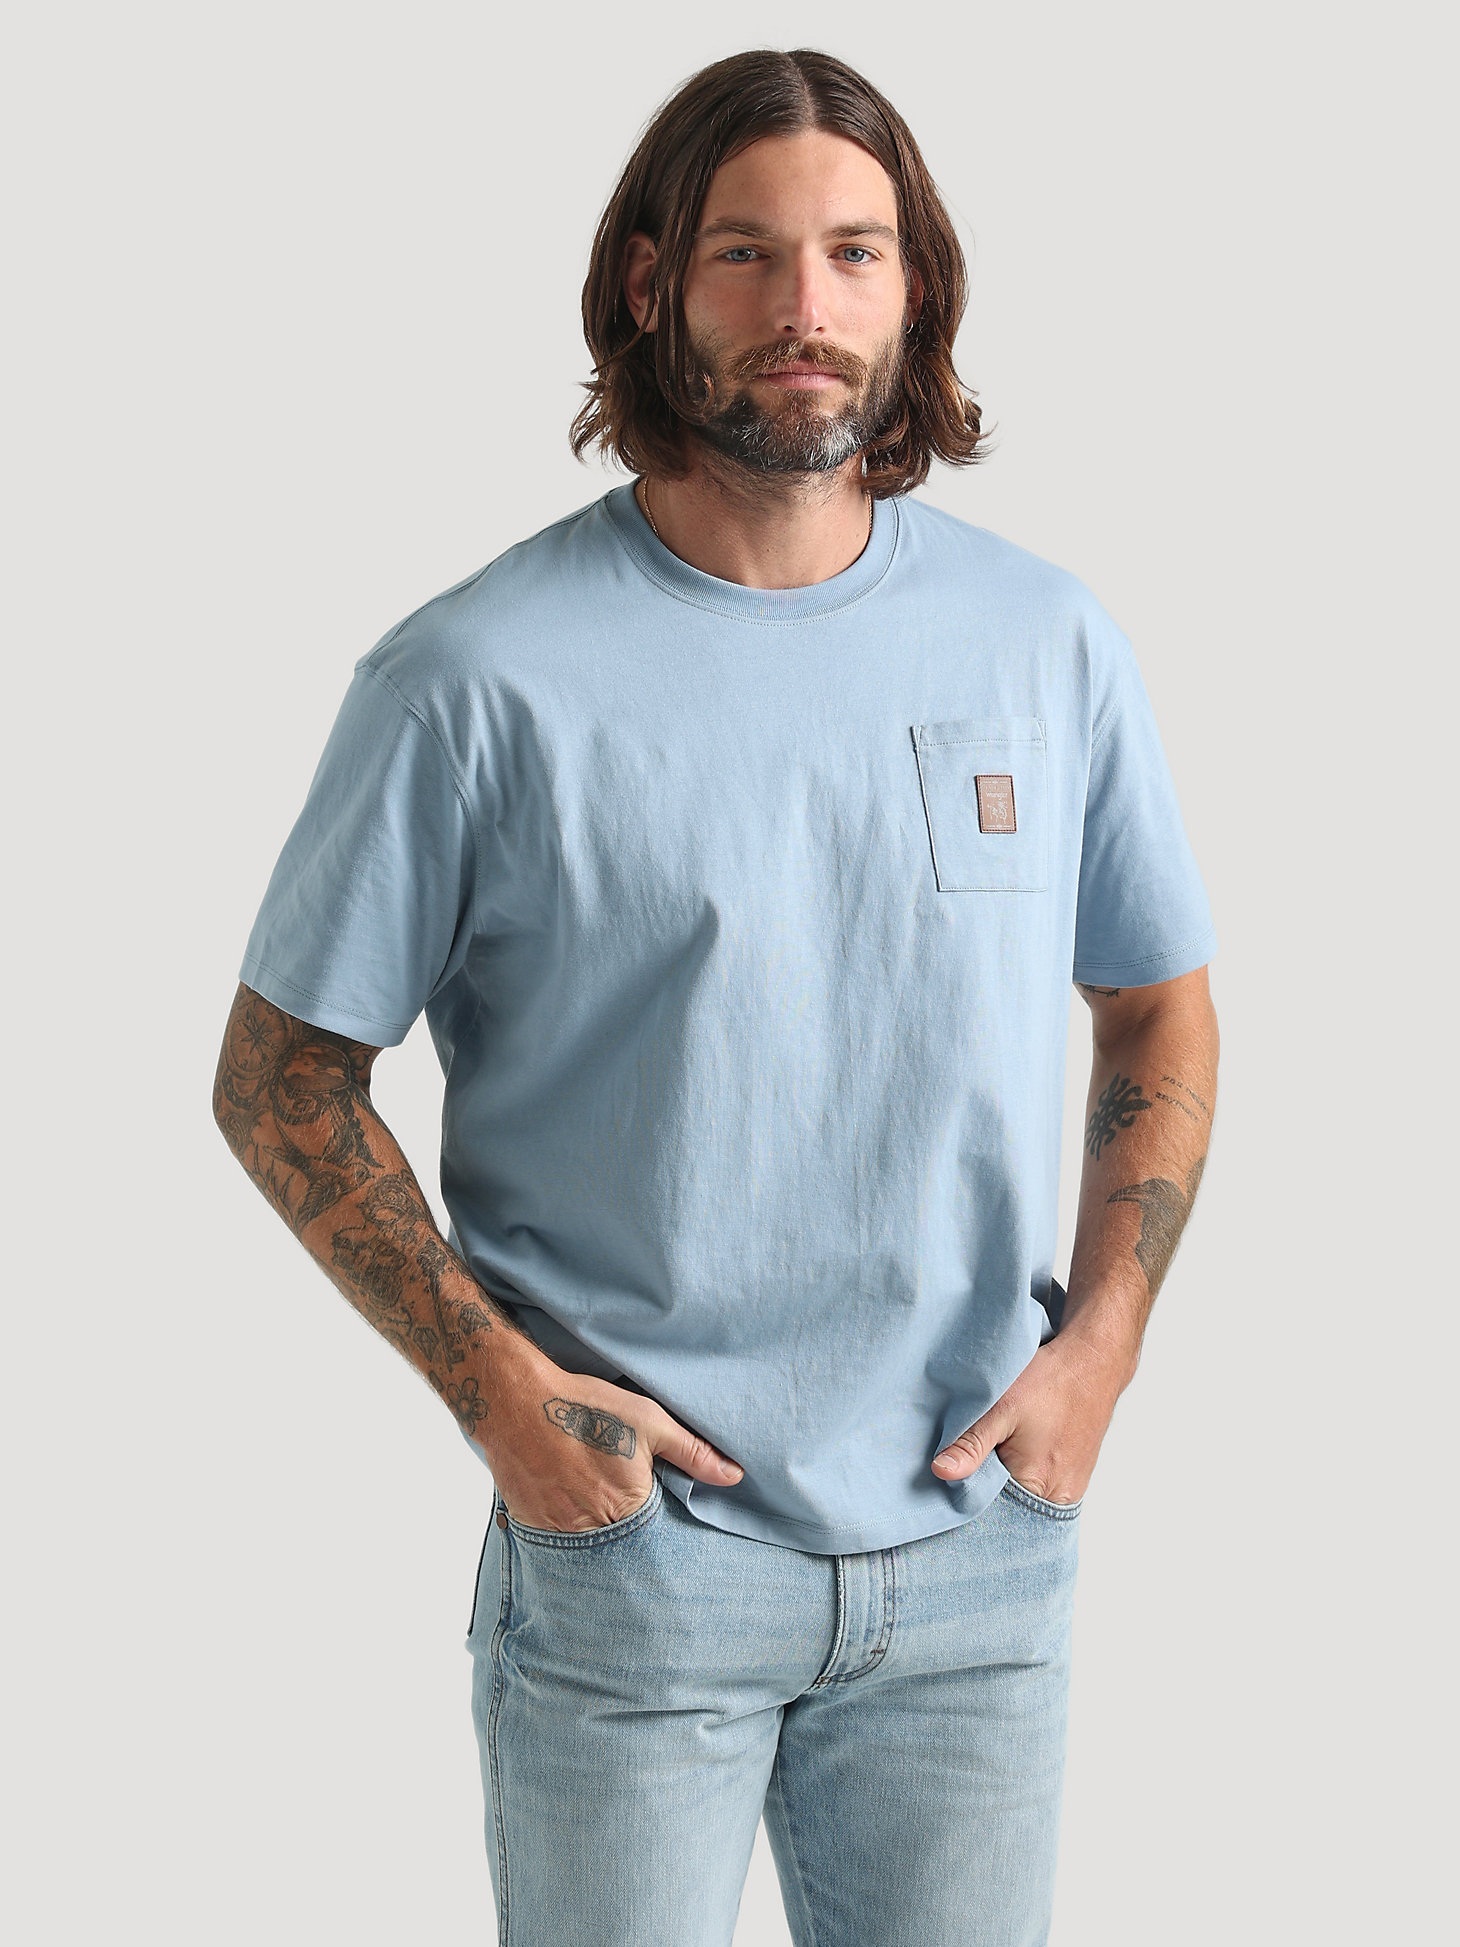 Wrangler x Pendleton Men's Pocket T-Shirt in Faded Denim main view